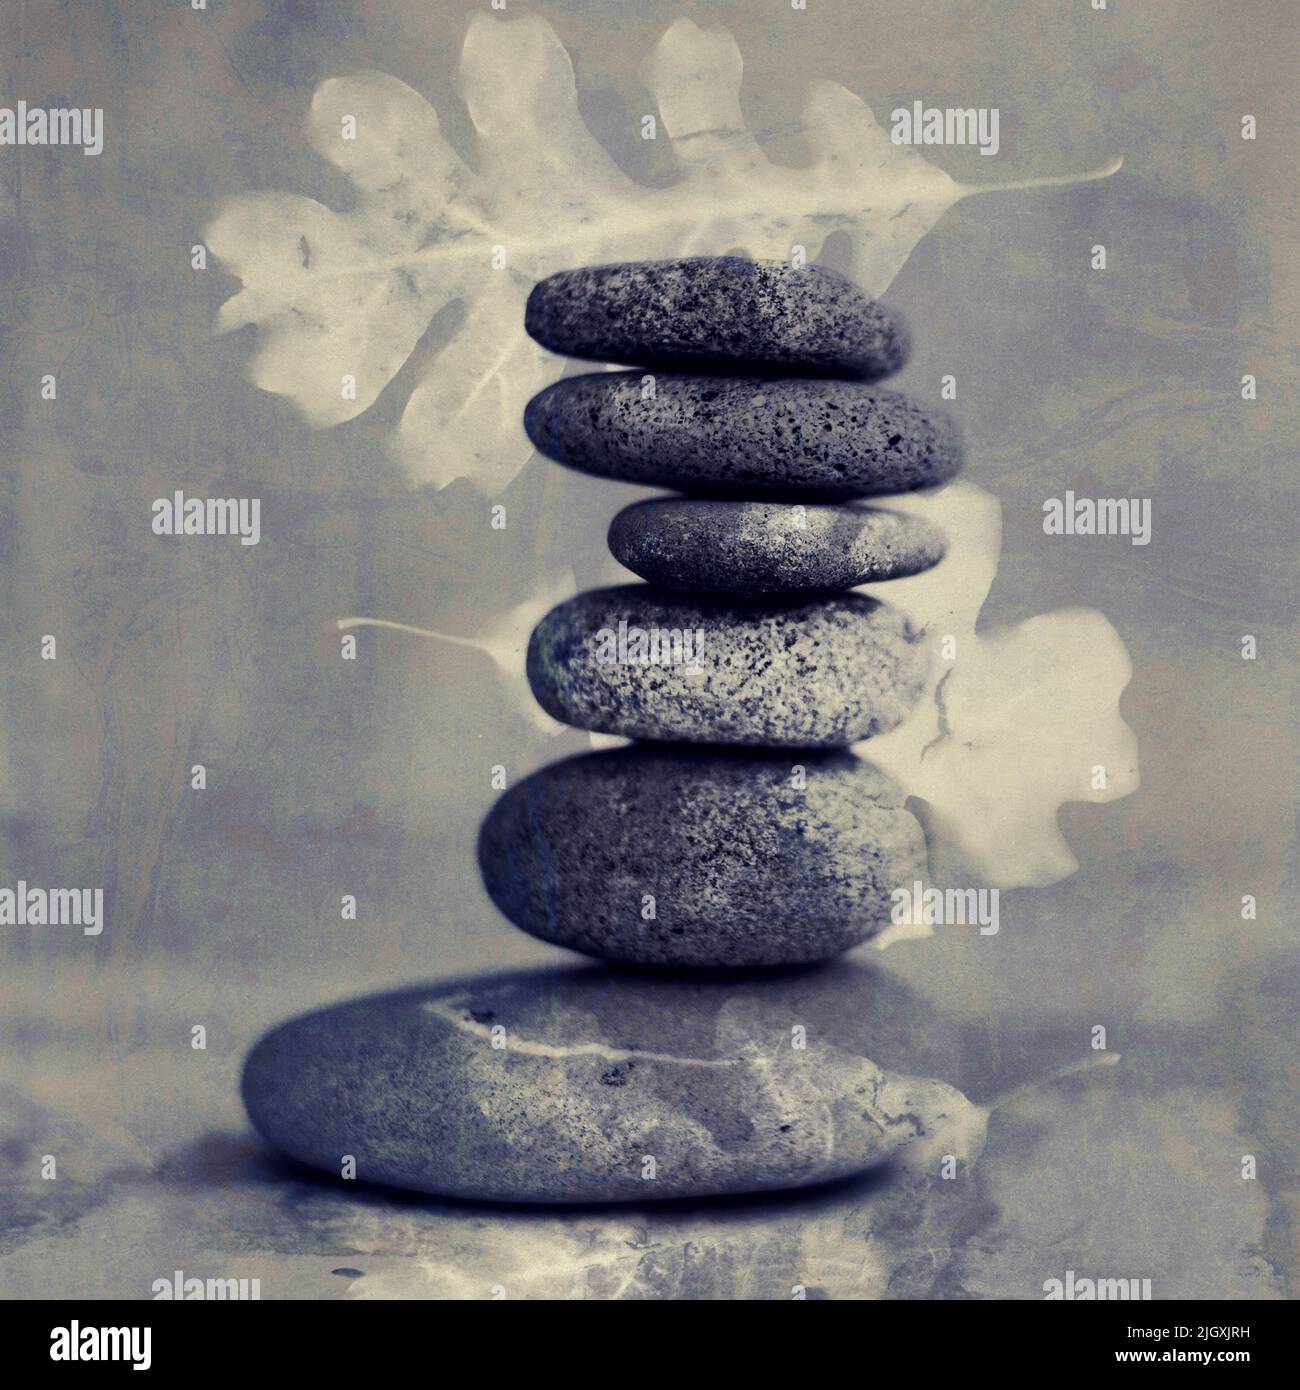 Still life photograph of balanced stones with oak leaf overlay. Stock Photo